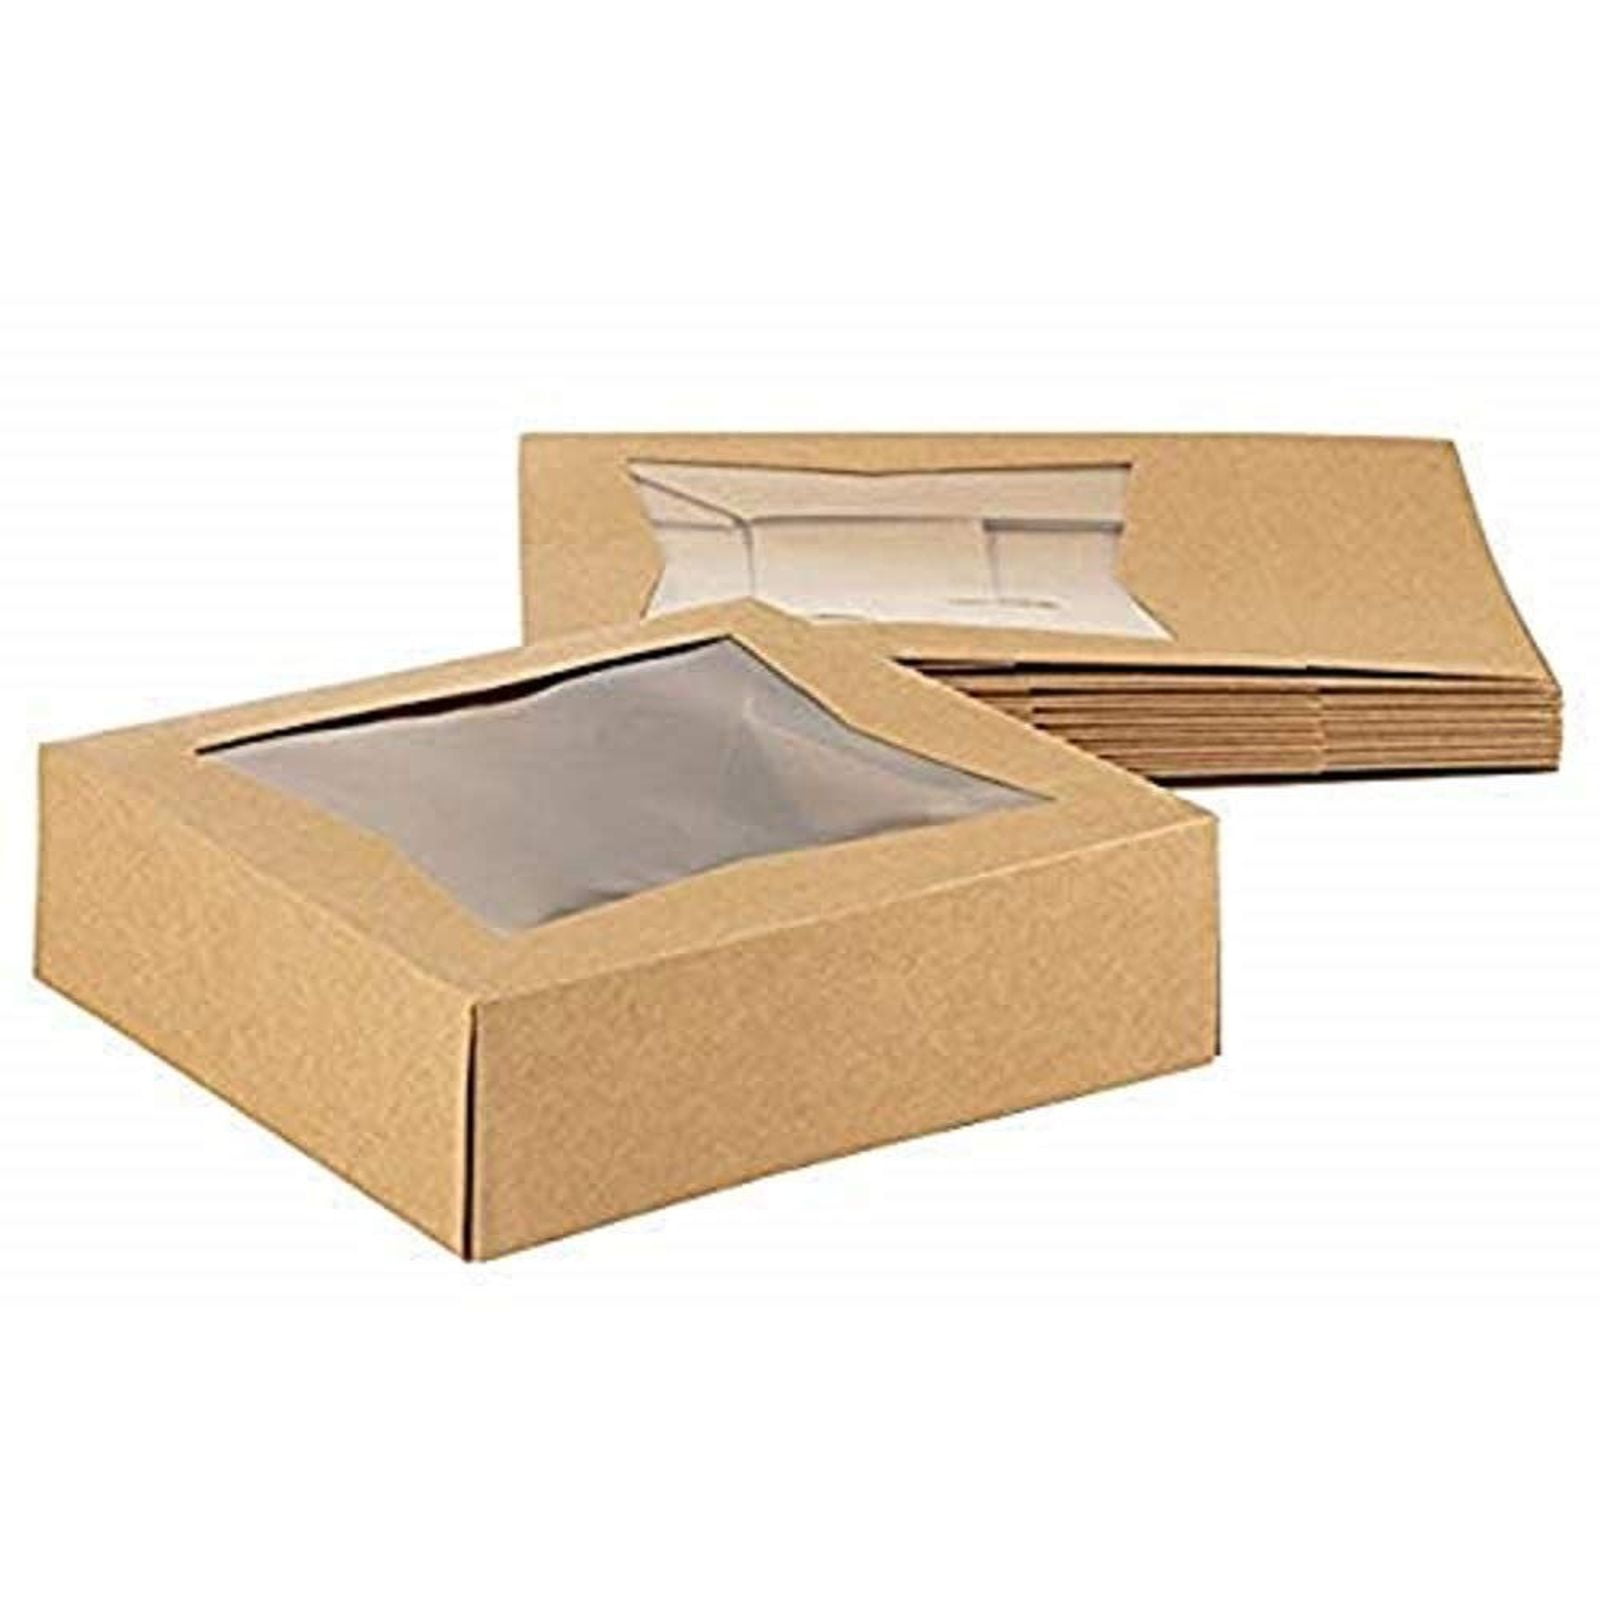 10 x Die Cut Flat Pack Display Window Gift Boxes High-quality Cardboard 